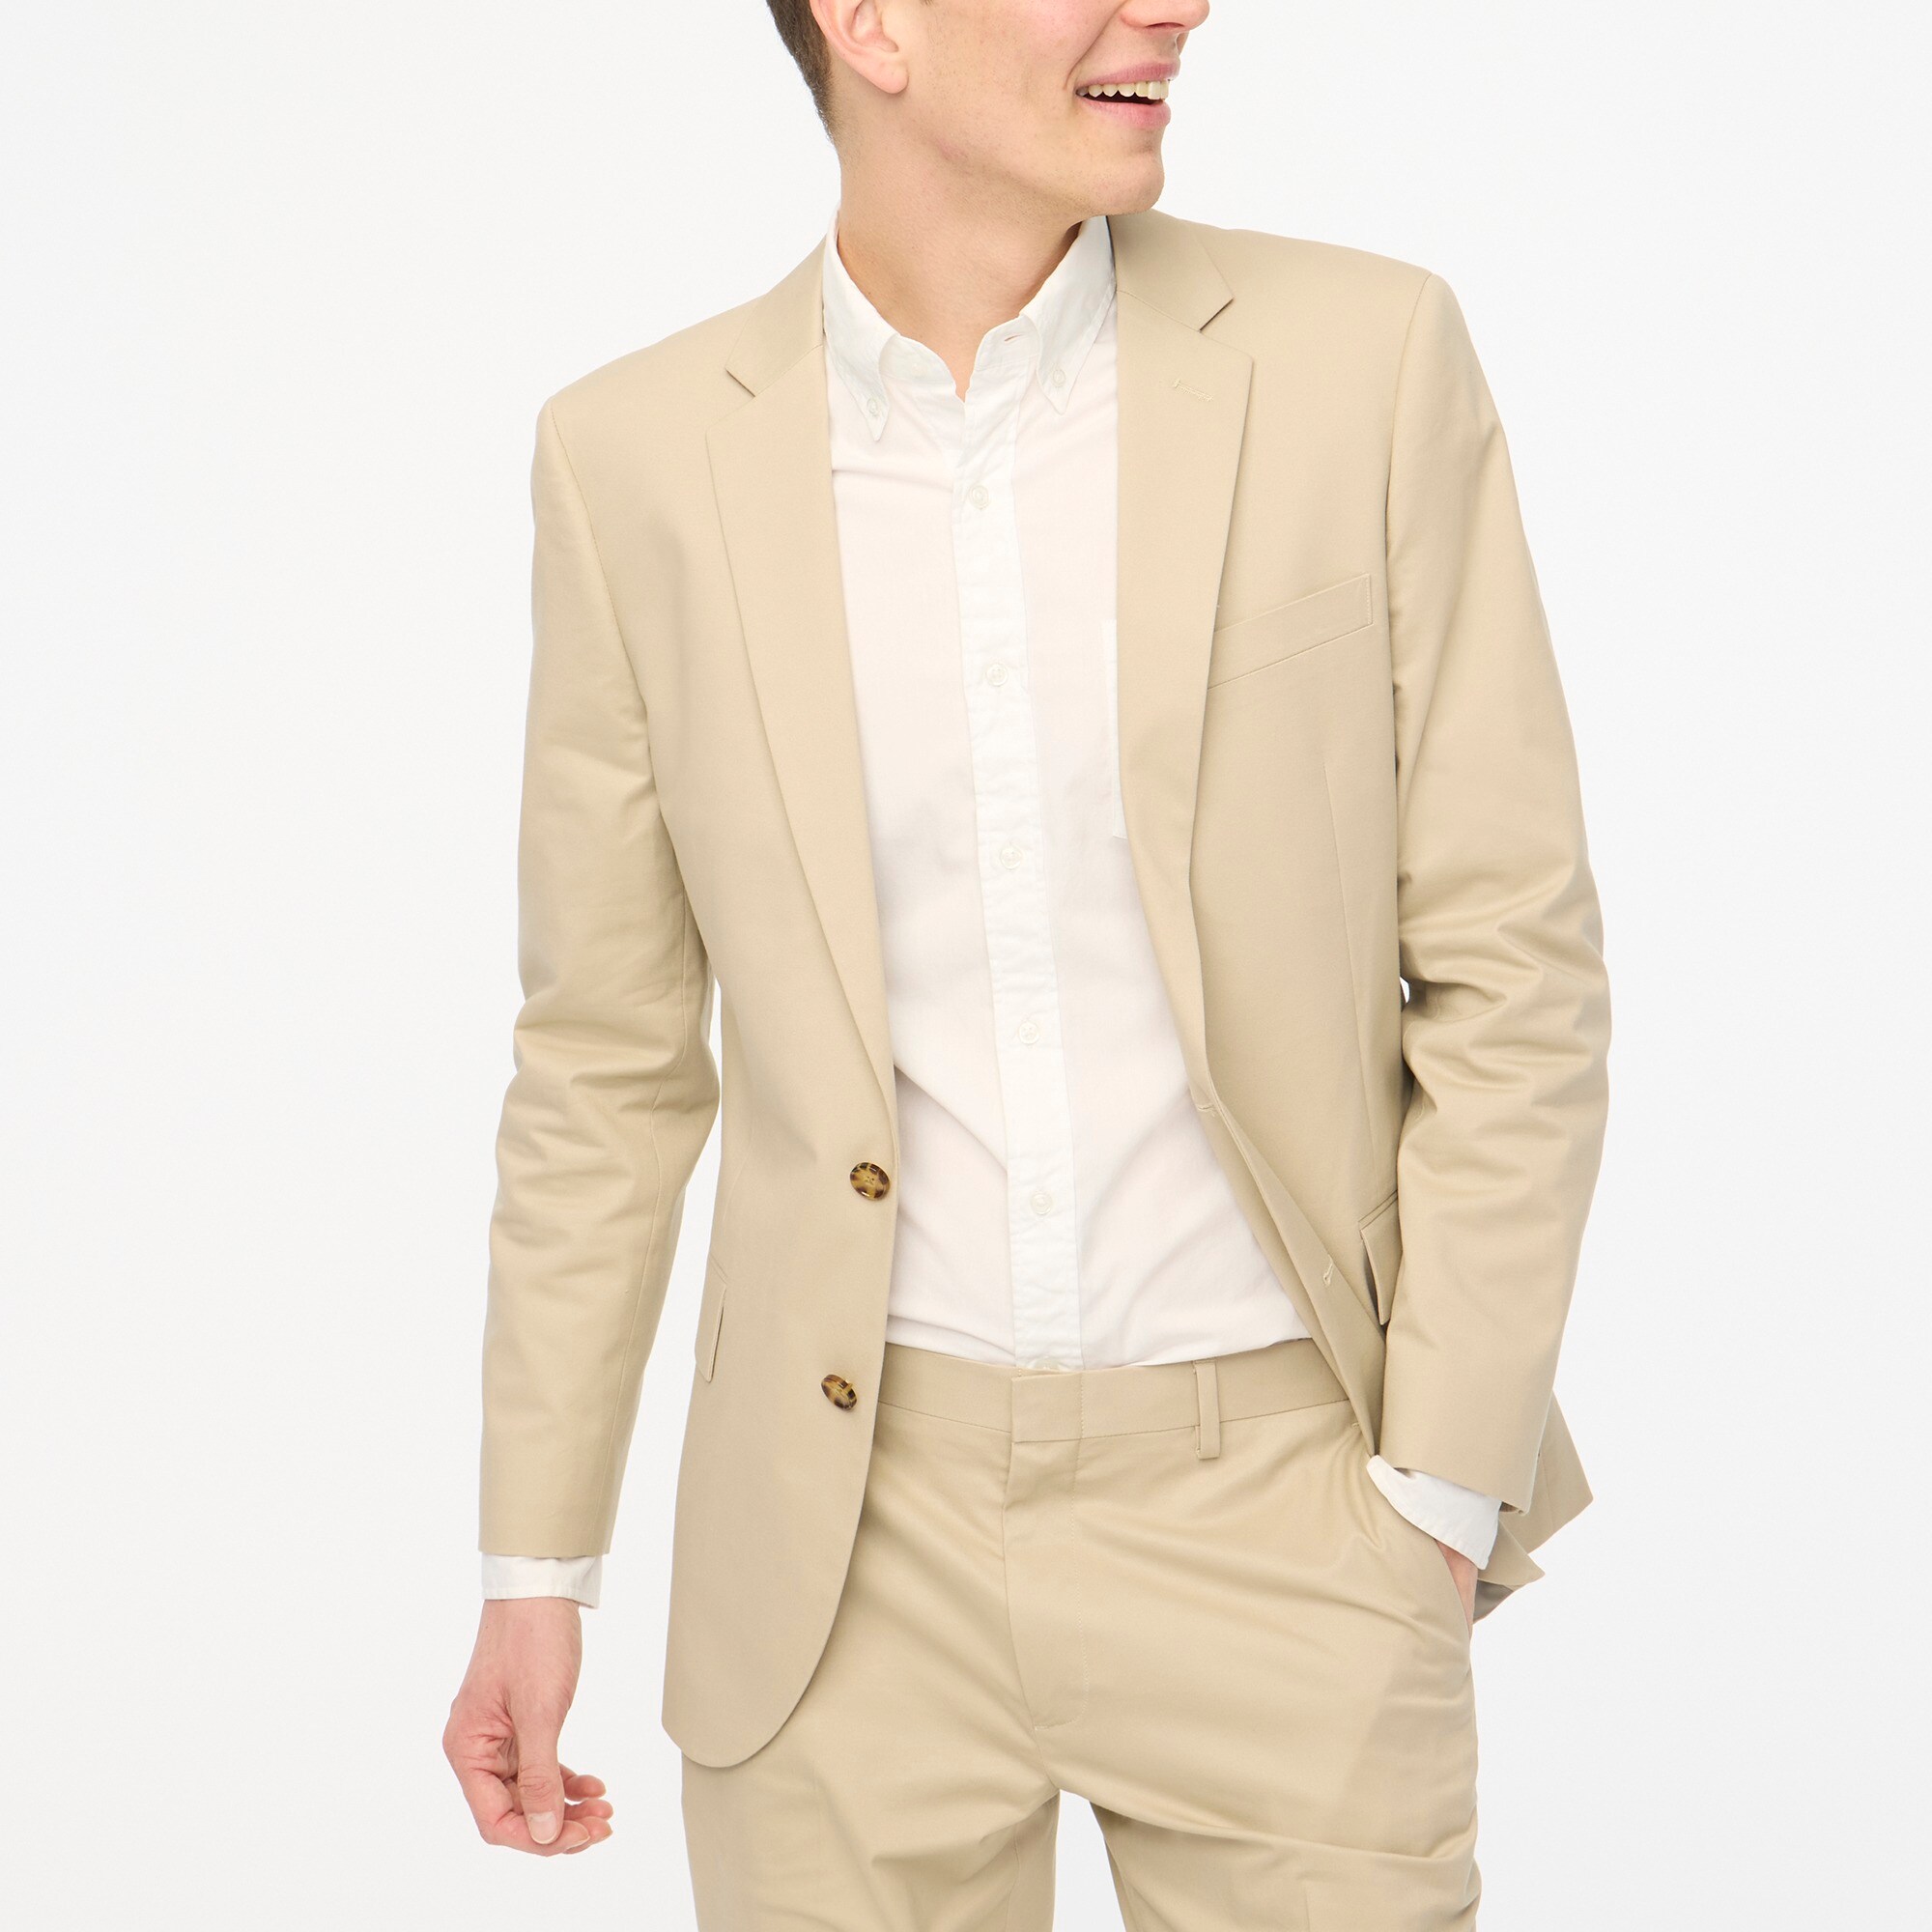  Slim-fit Thompson chino suit jacket